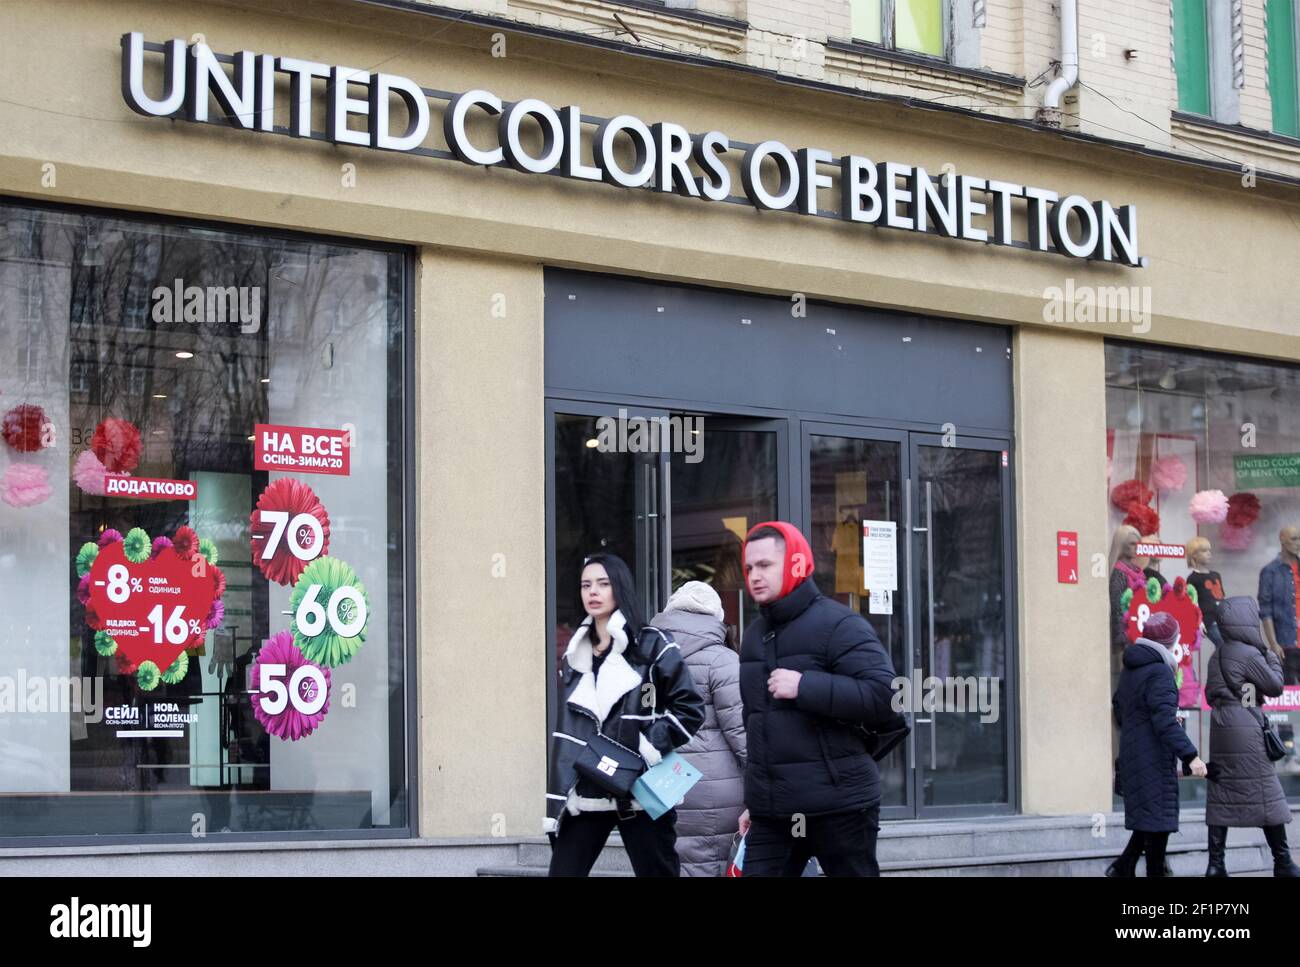 Kiev, Ukraine. 06th Mar, 2021. United Colors of Benetton logo of Benetton  Group seen over the